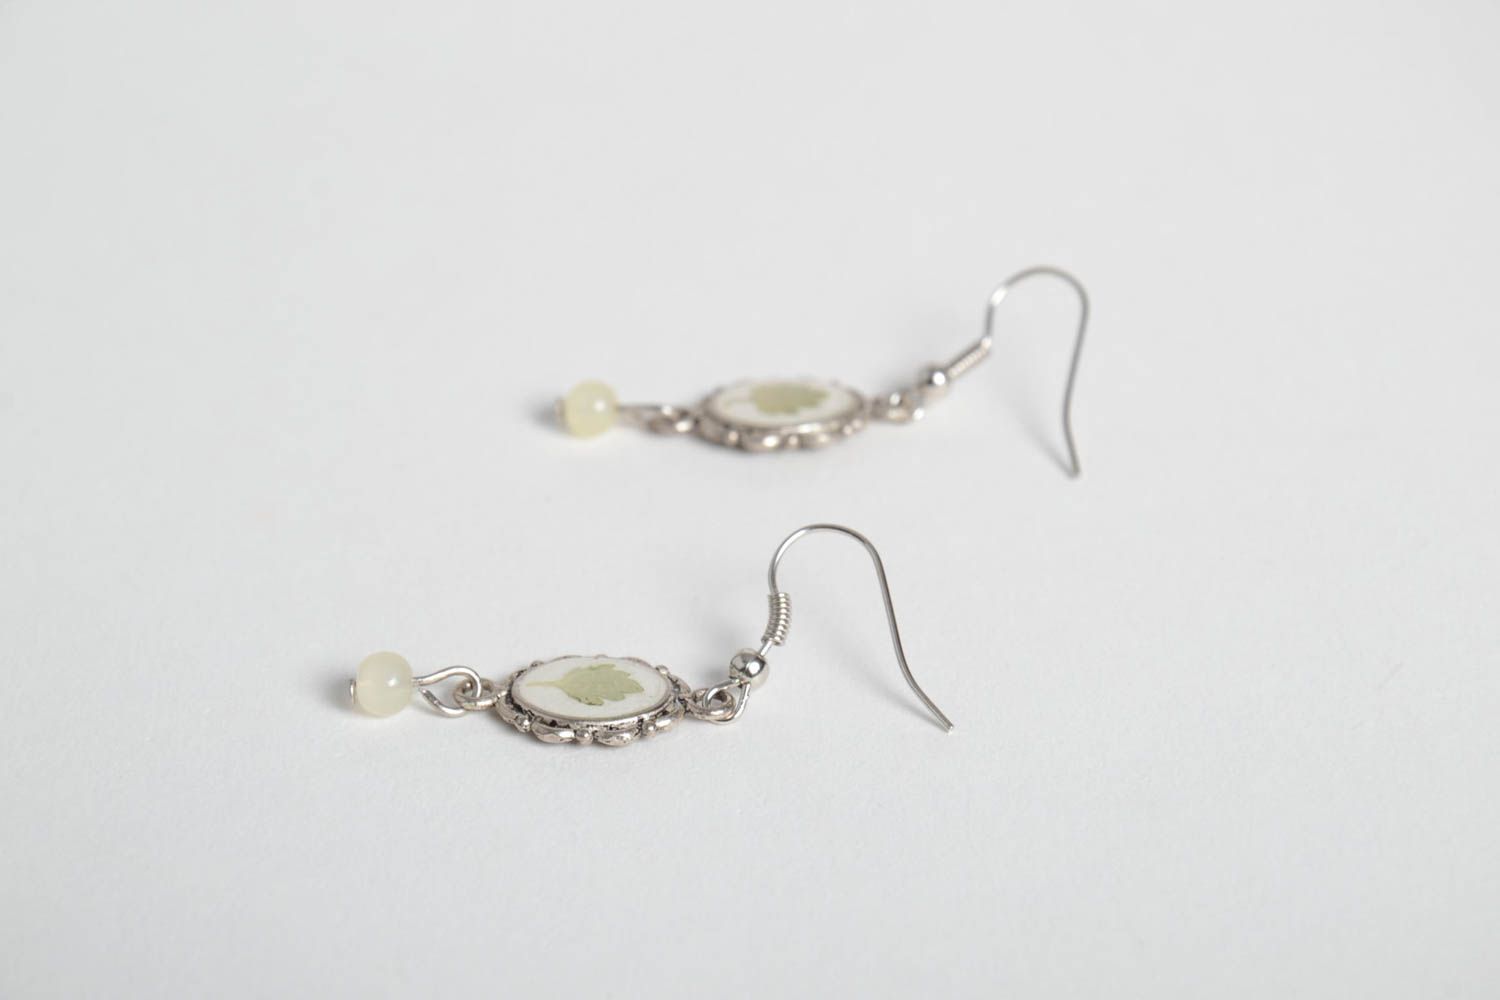 Handmade vintage jewelry unusual earrings with charms designer earrings photo 4